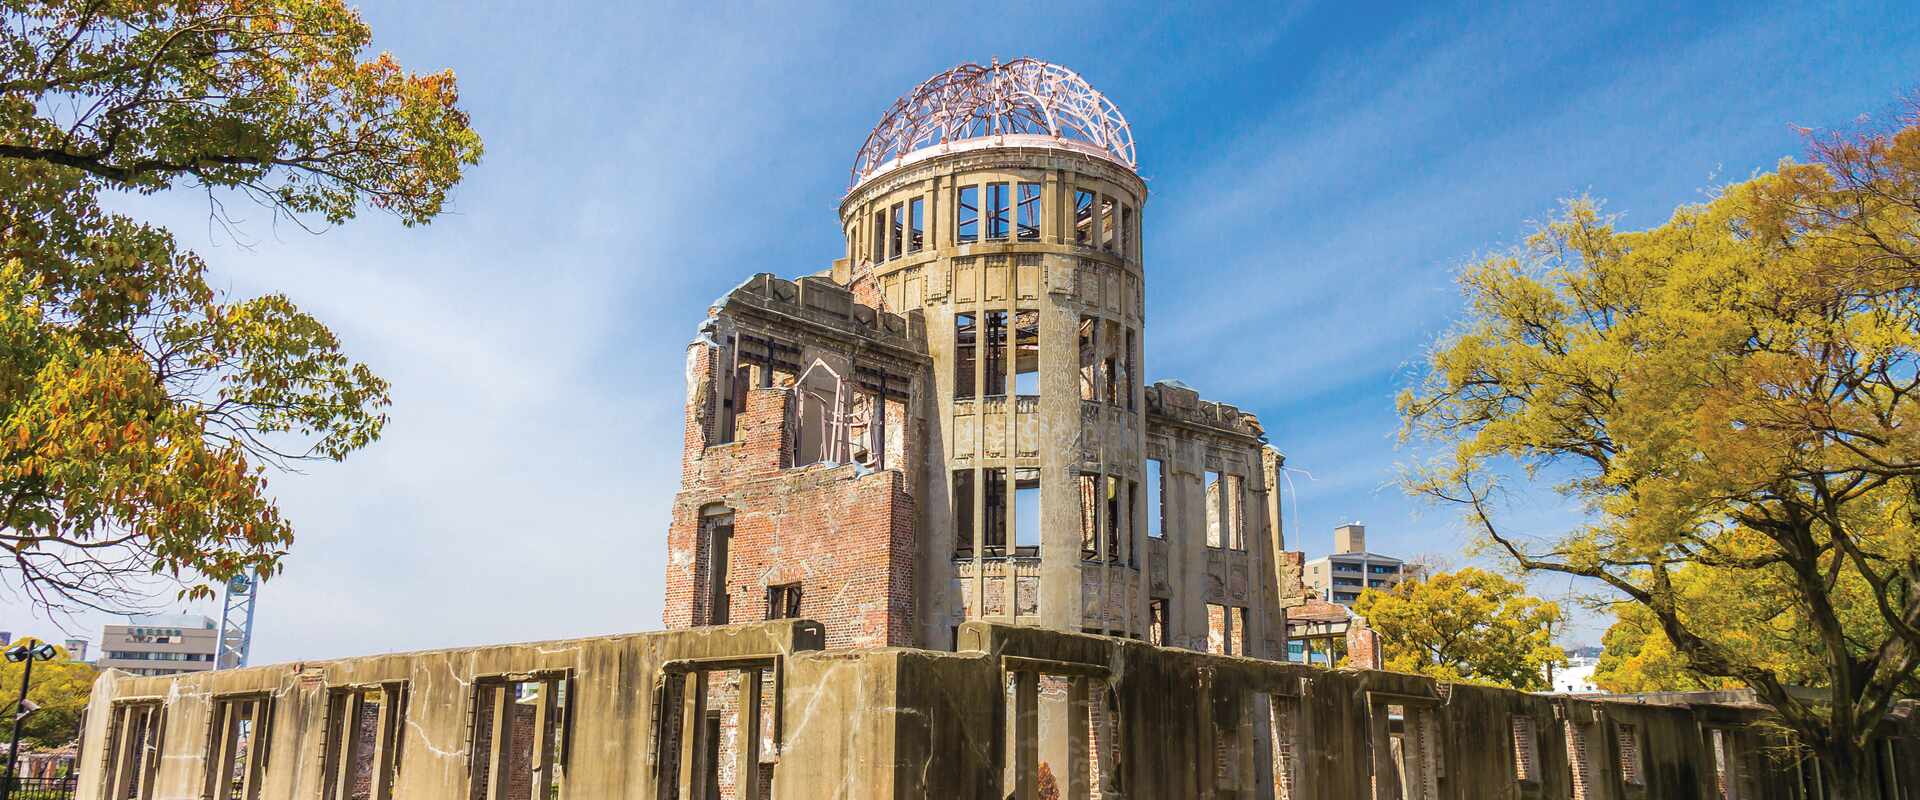 View of Atomic Bomb Dome at Hiroshima Peace Memorial, Japan